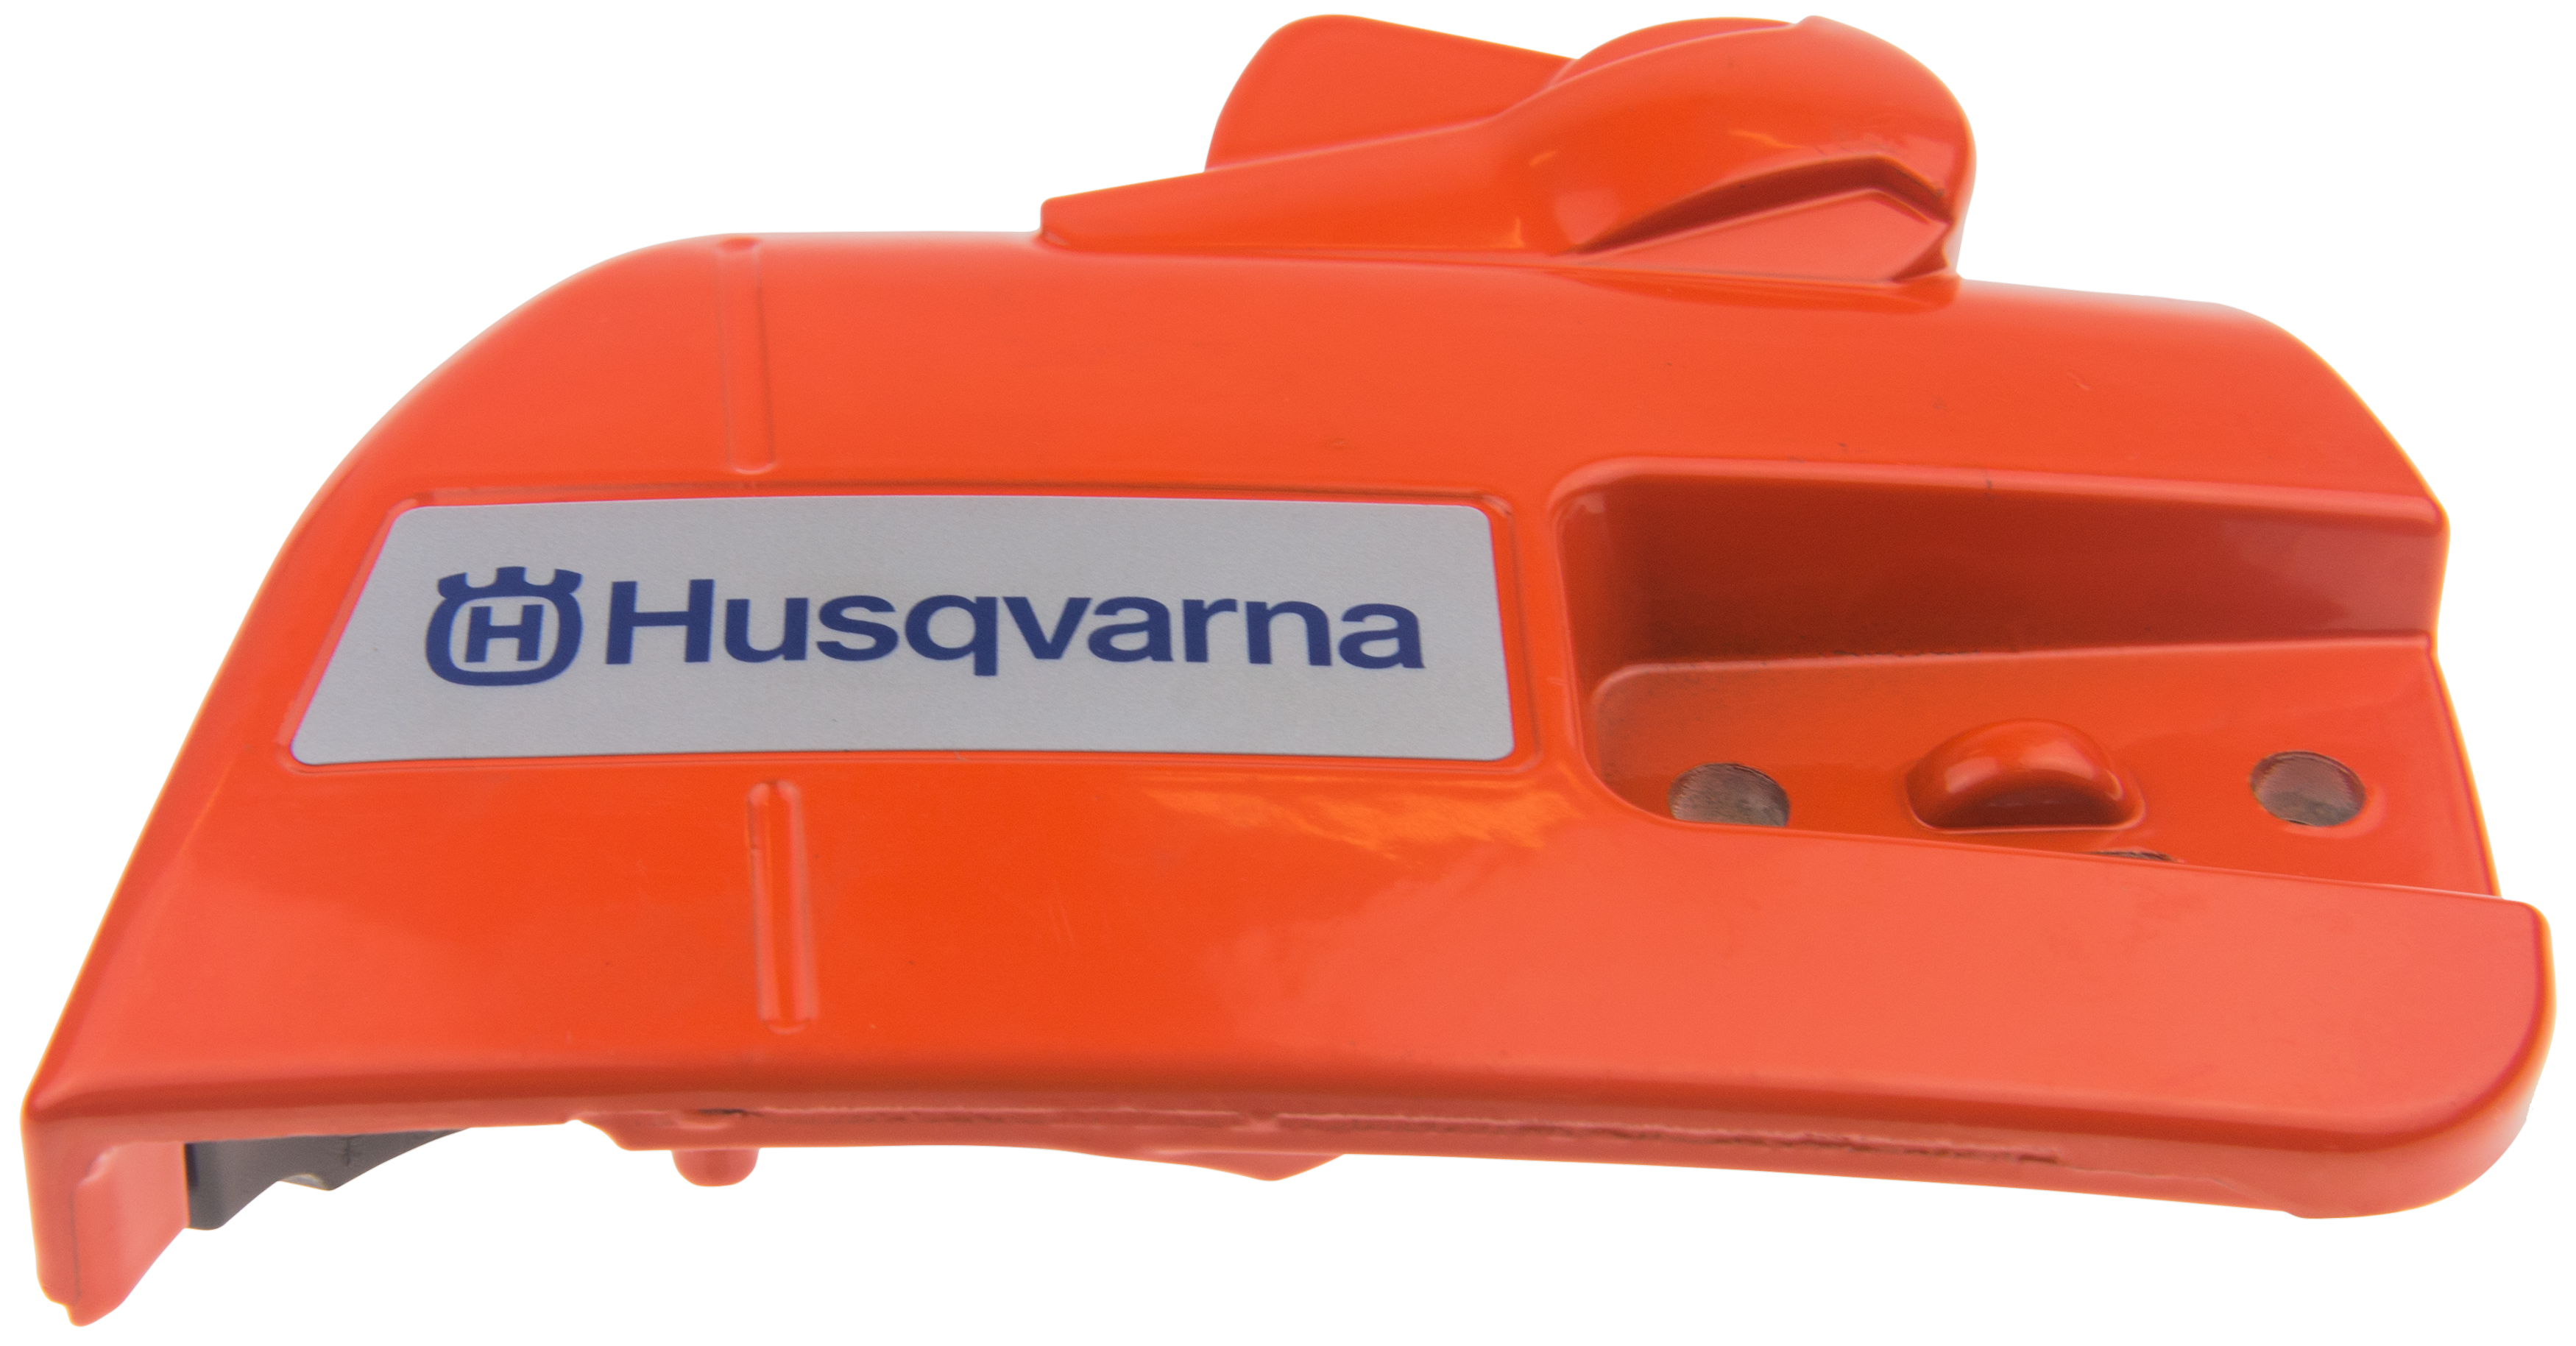 Бензопилы хускварна (husqvarna) 340 — особенности, характеристики